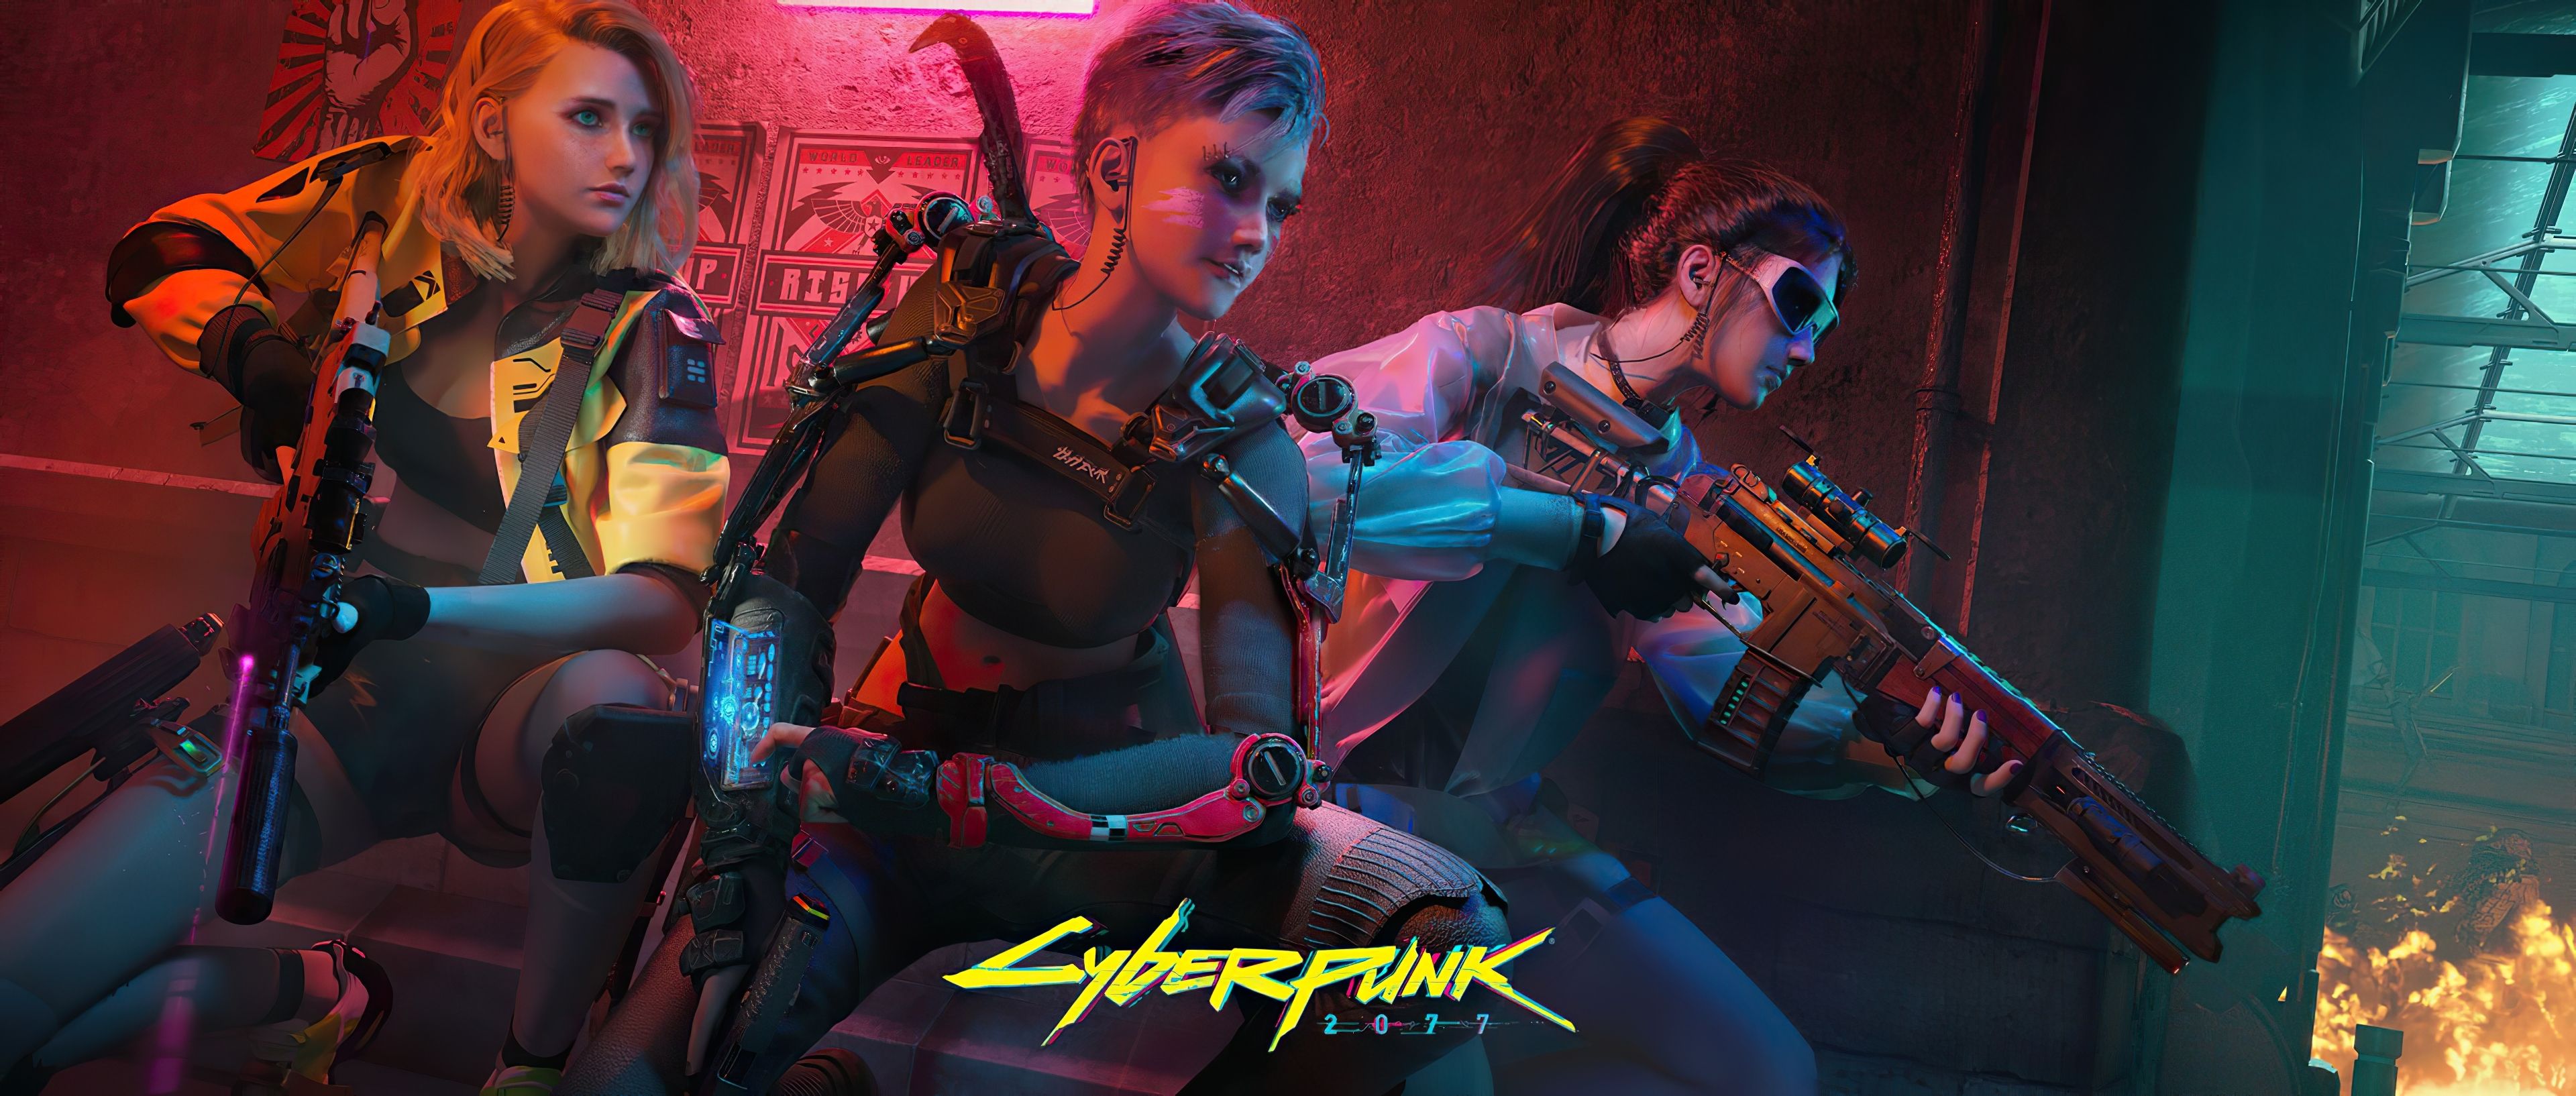 Cyberpunk 2077 Girl Team Wallpaper, HD Games 4K Wallpaper, Image, Photo and Background